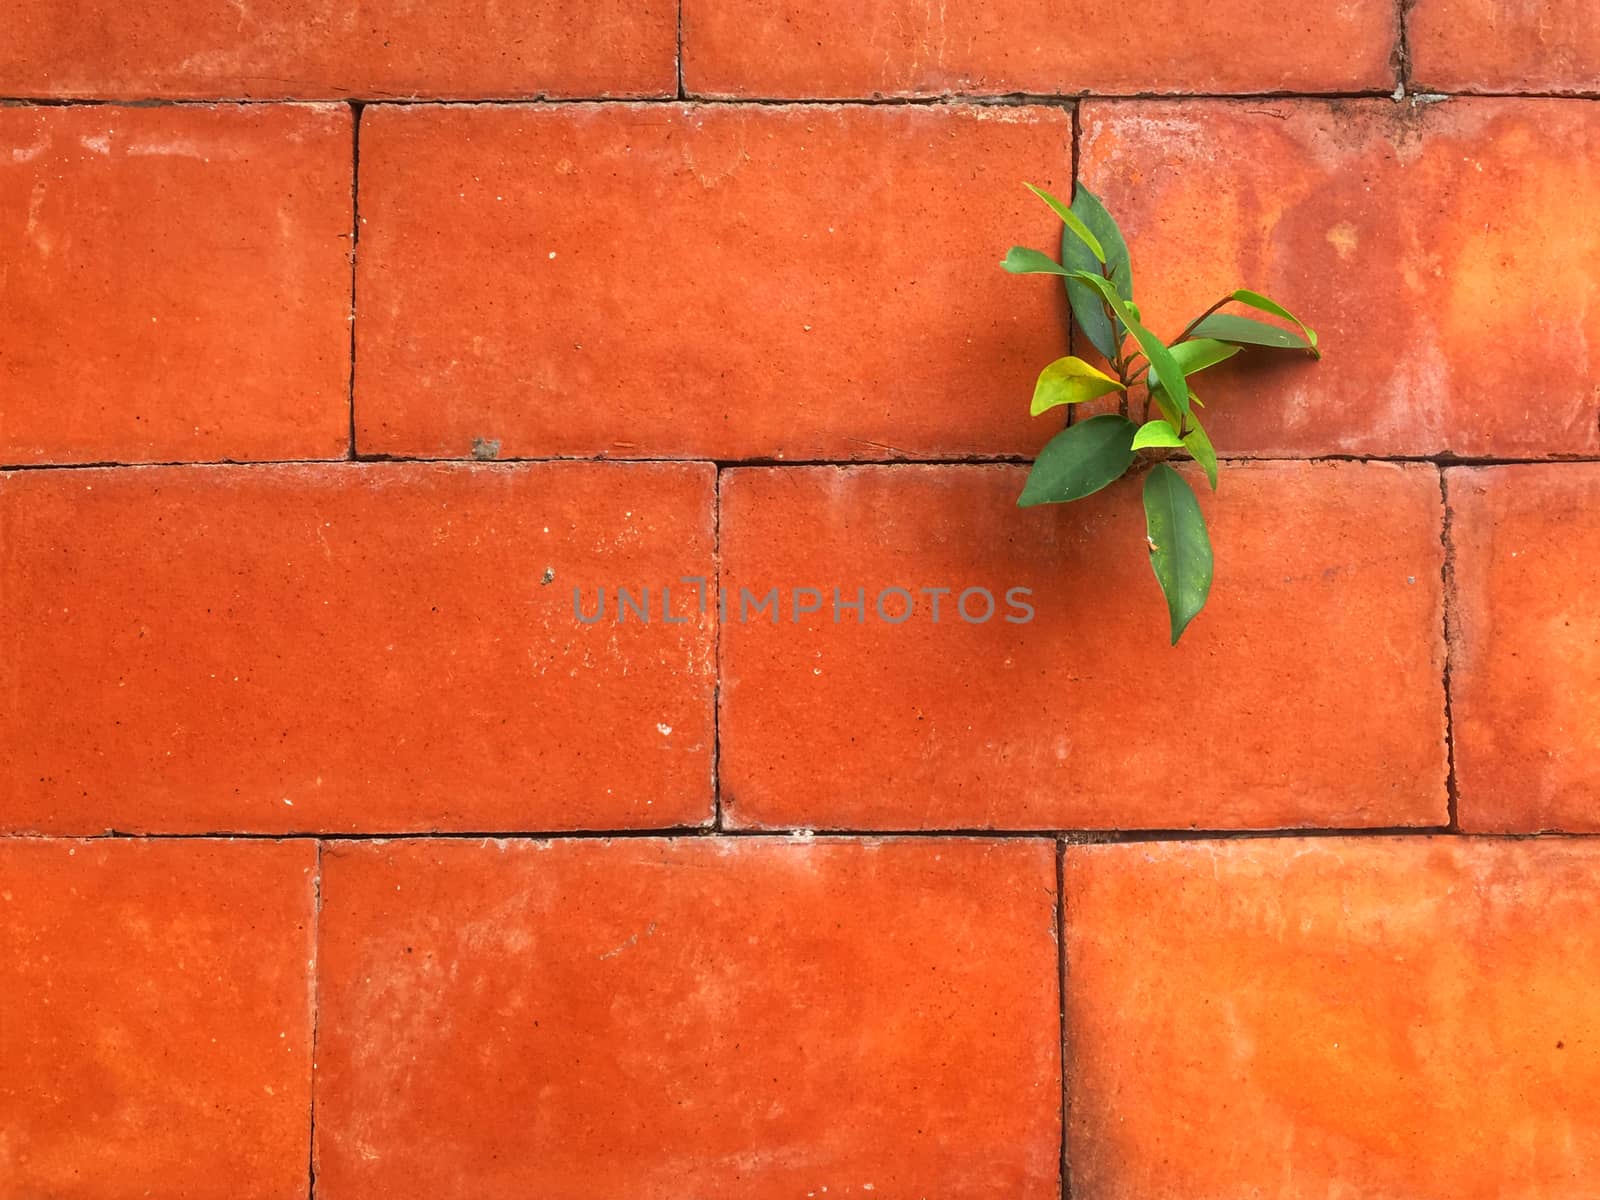 Small tree growing on an orange tile wall. by e22xua